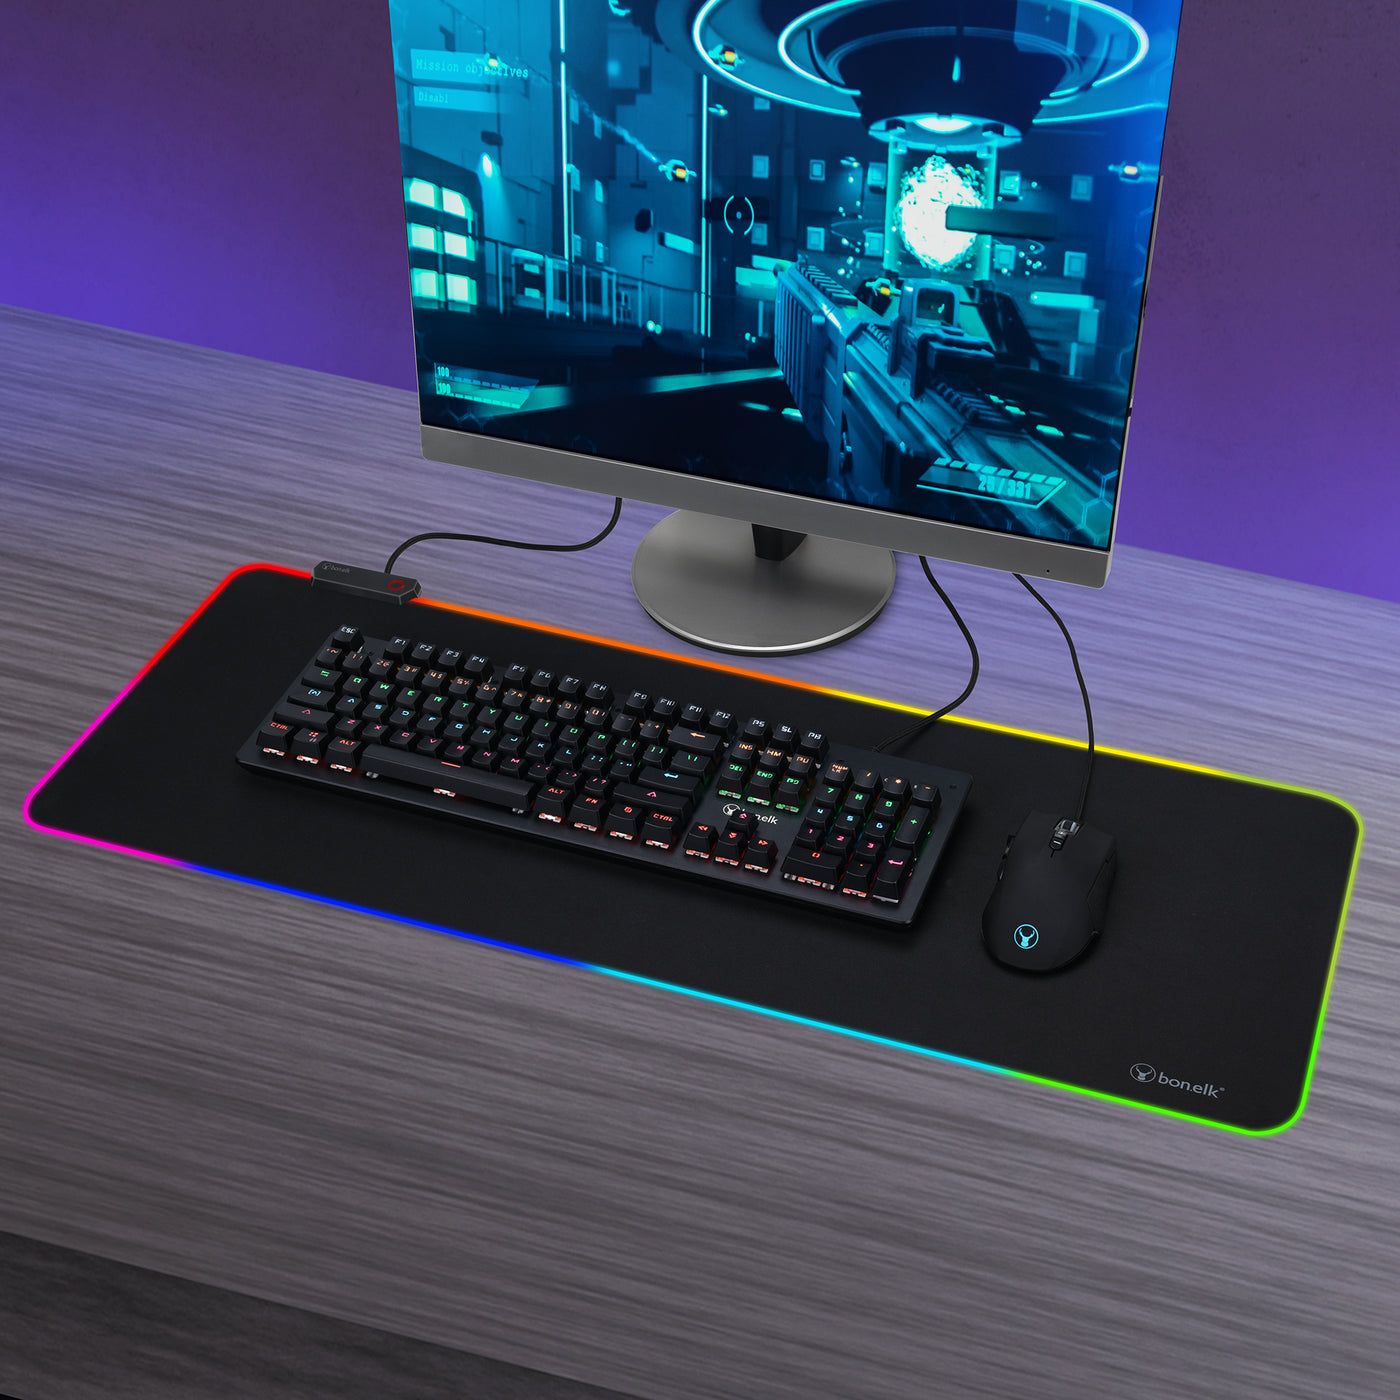 Bonelk Gaming RGB Keyboard/Mouse Pad 80x30cm, USB, MX-831R - Black